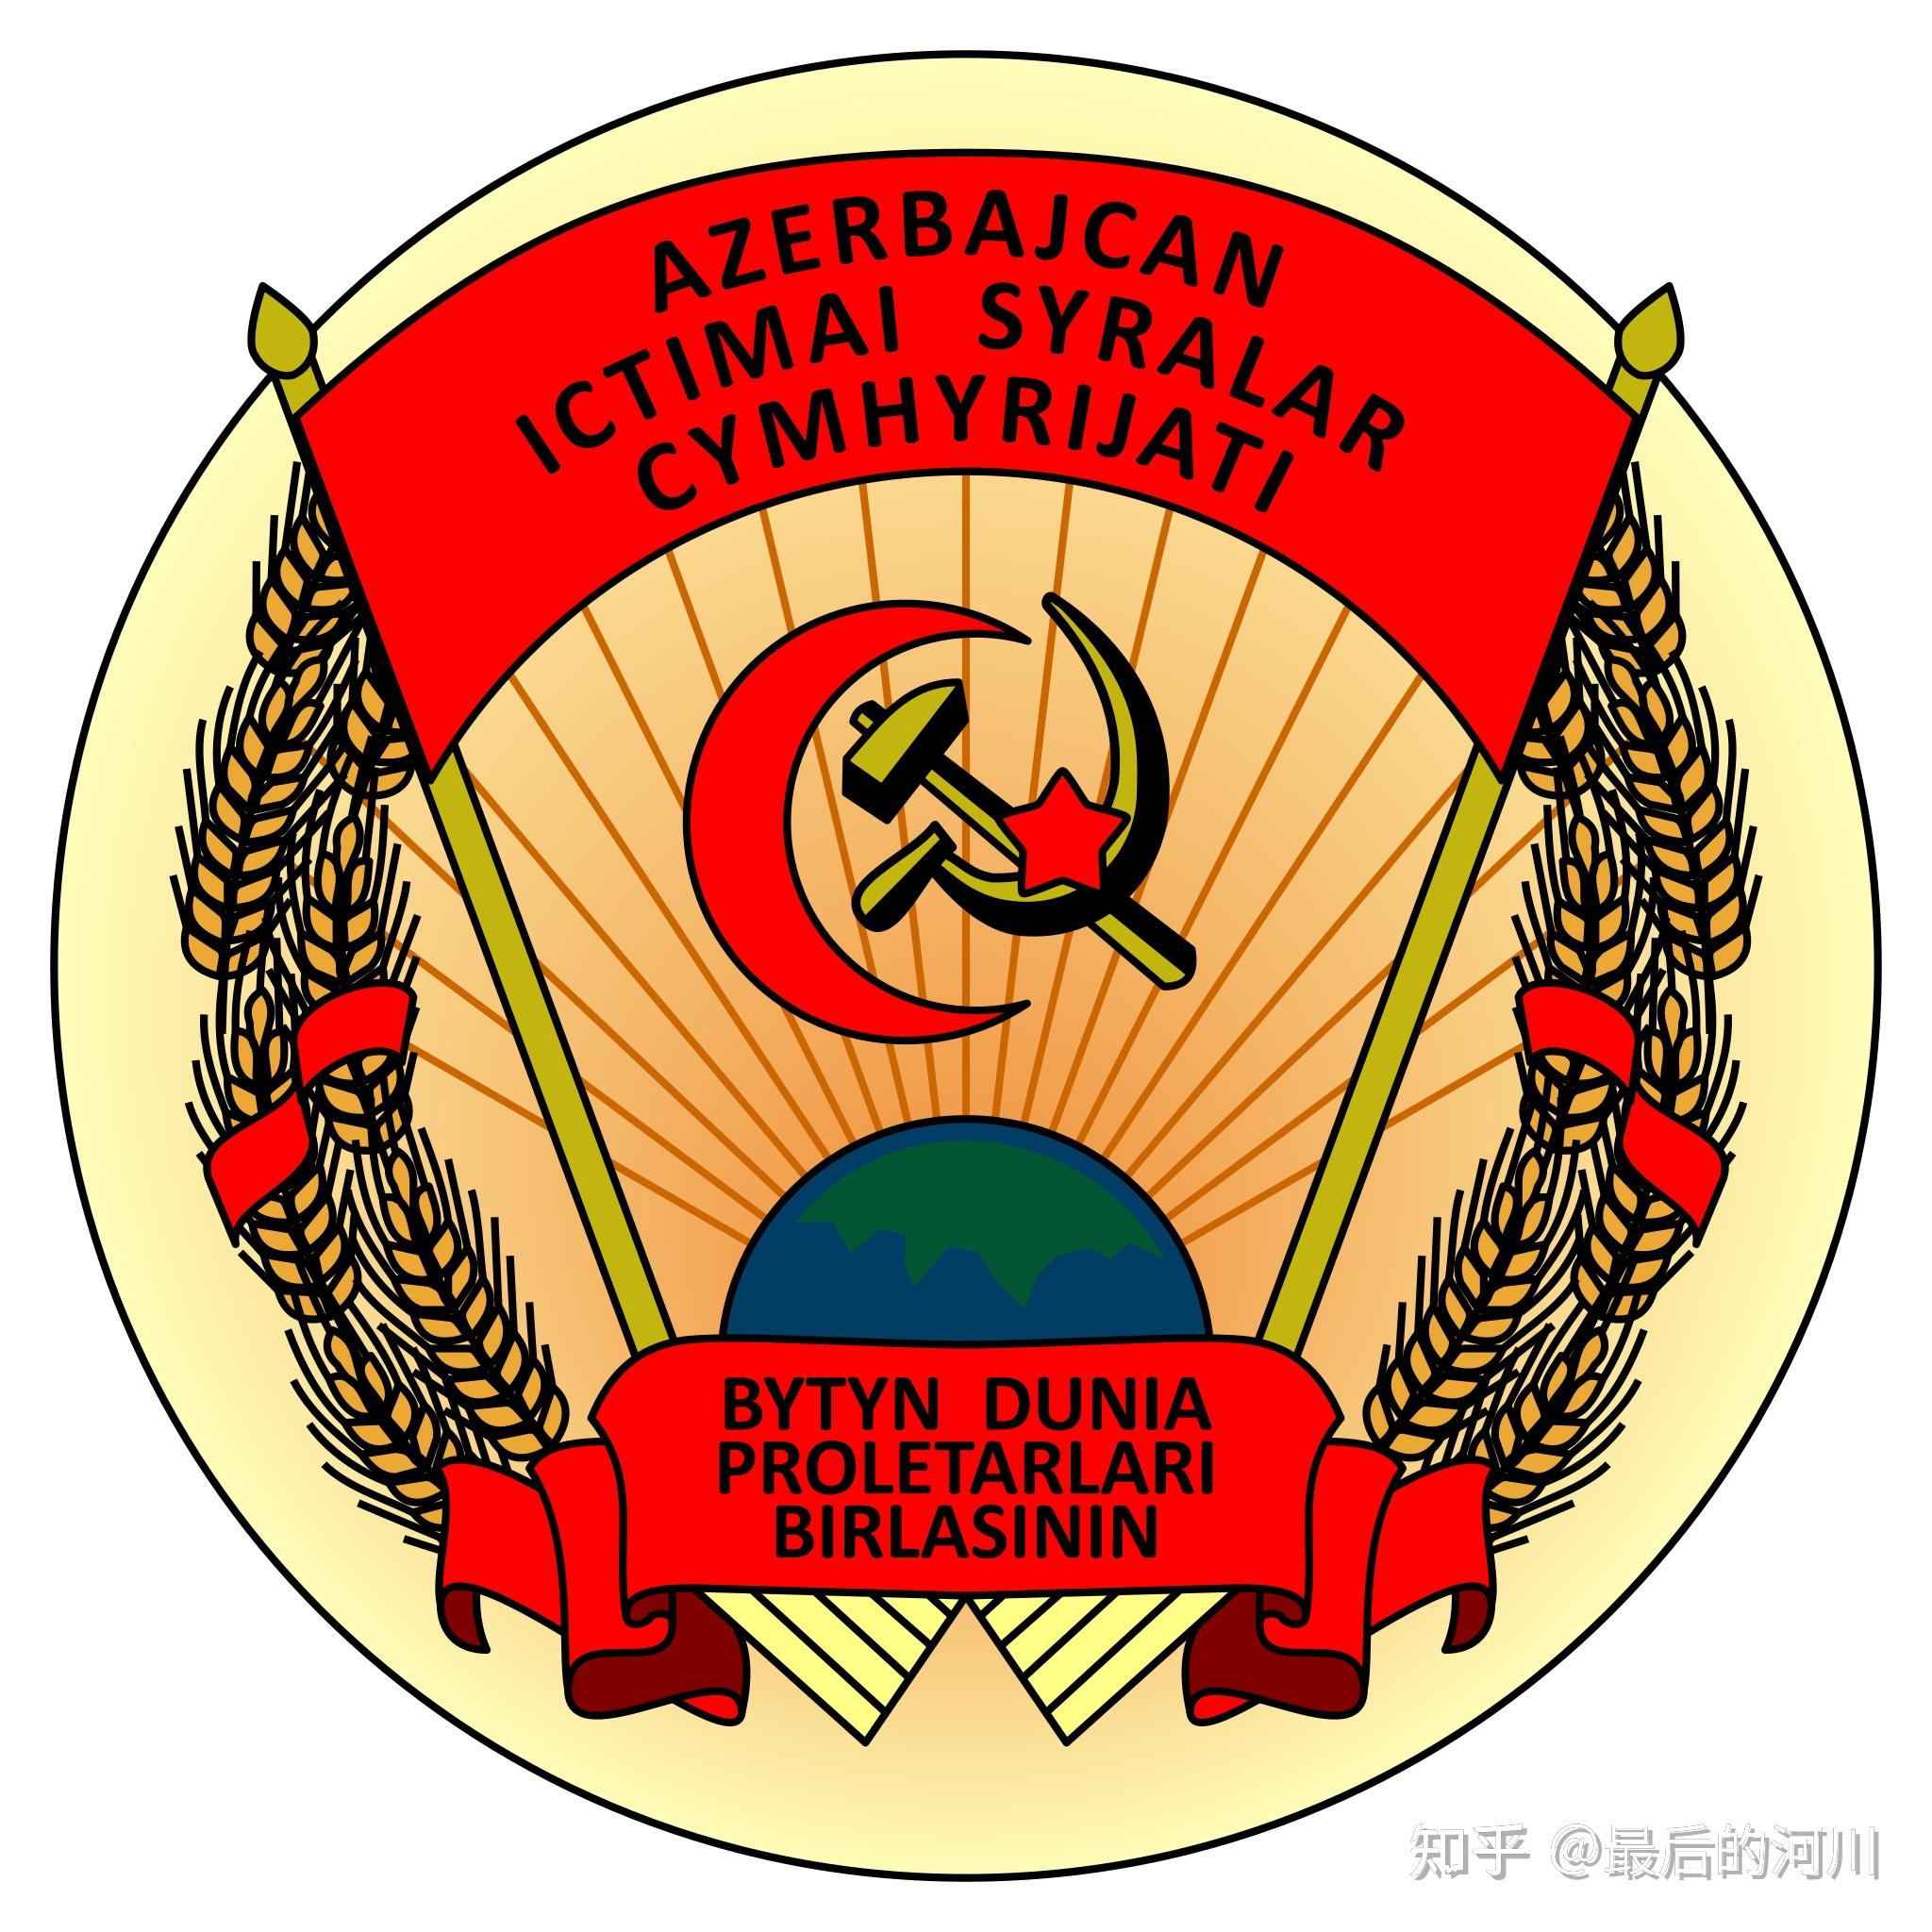 阿塞拜疆苏维埃社会主义共和国(az05rbaycan sovet sosialist